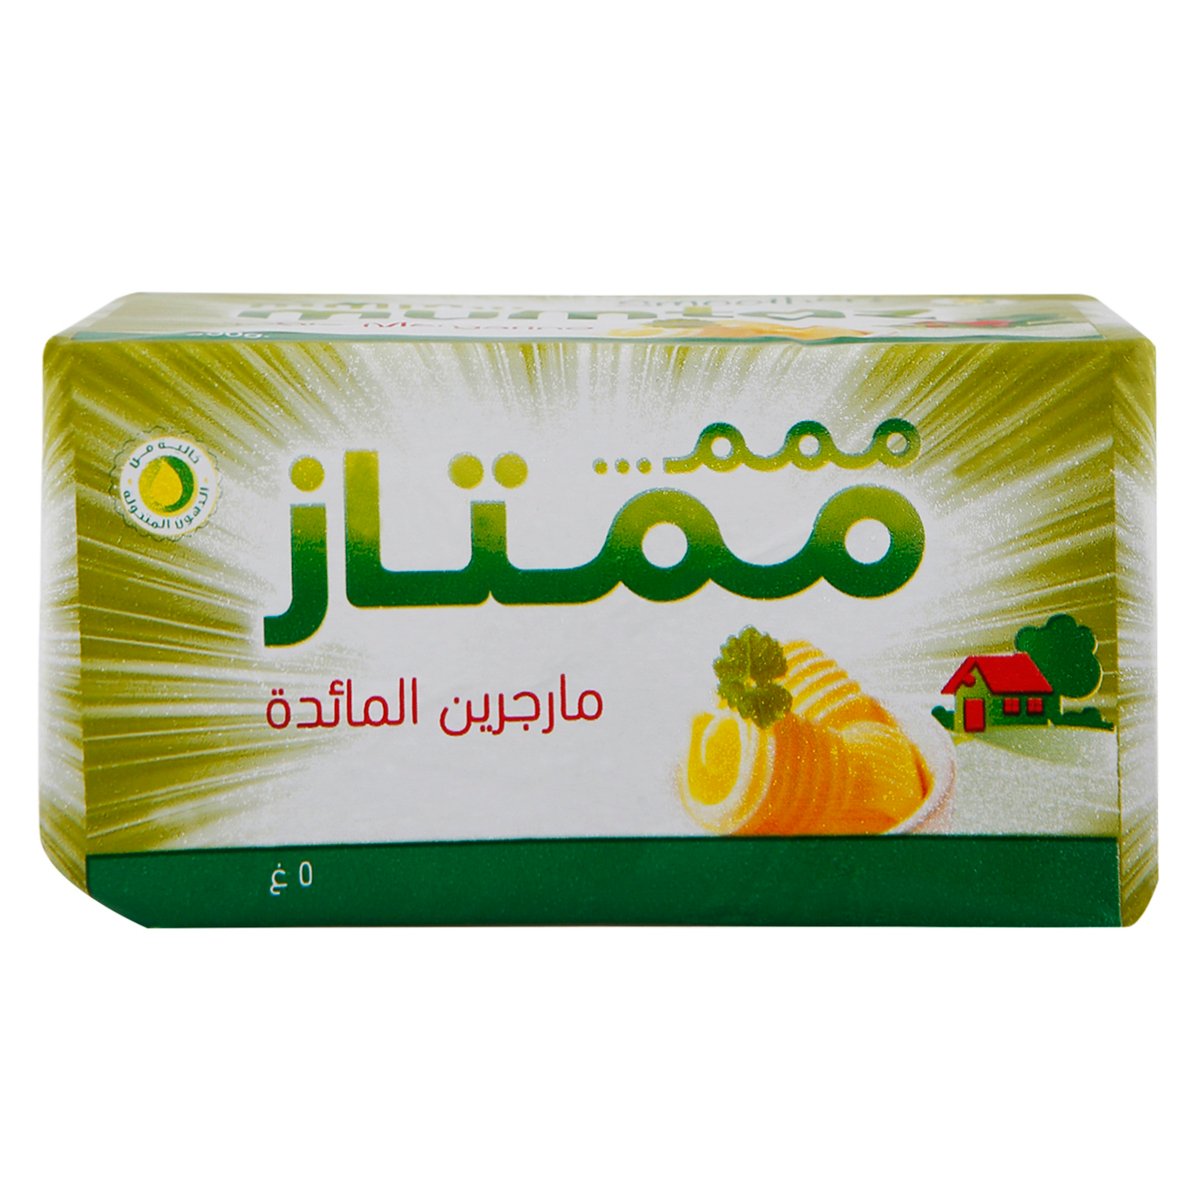 Mumtaz Table Margarine 500 g